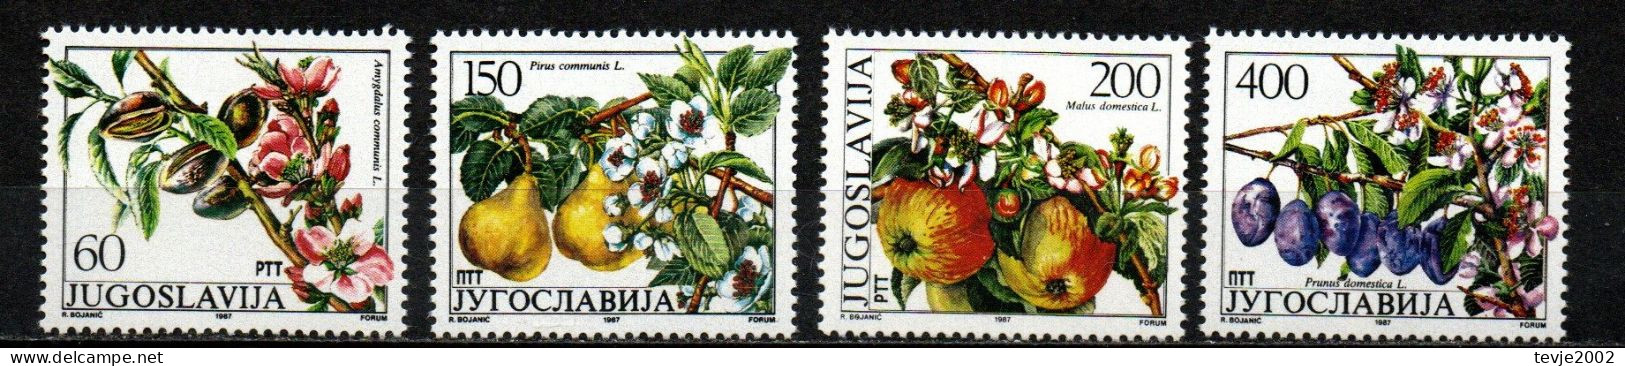 Jugoslawien 1987 - Mi.Nr. 2221 - 2224 - Postfrisch MNH - Früchte Fruits Obst - Frutta